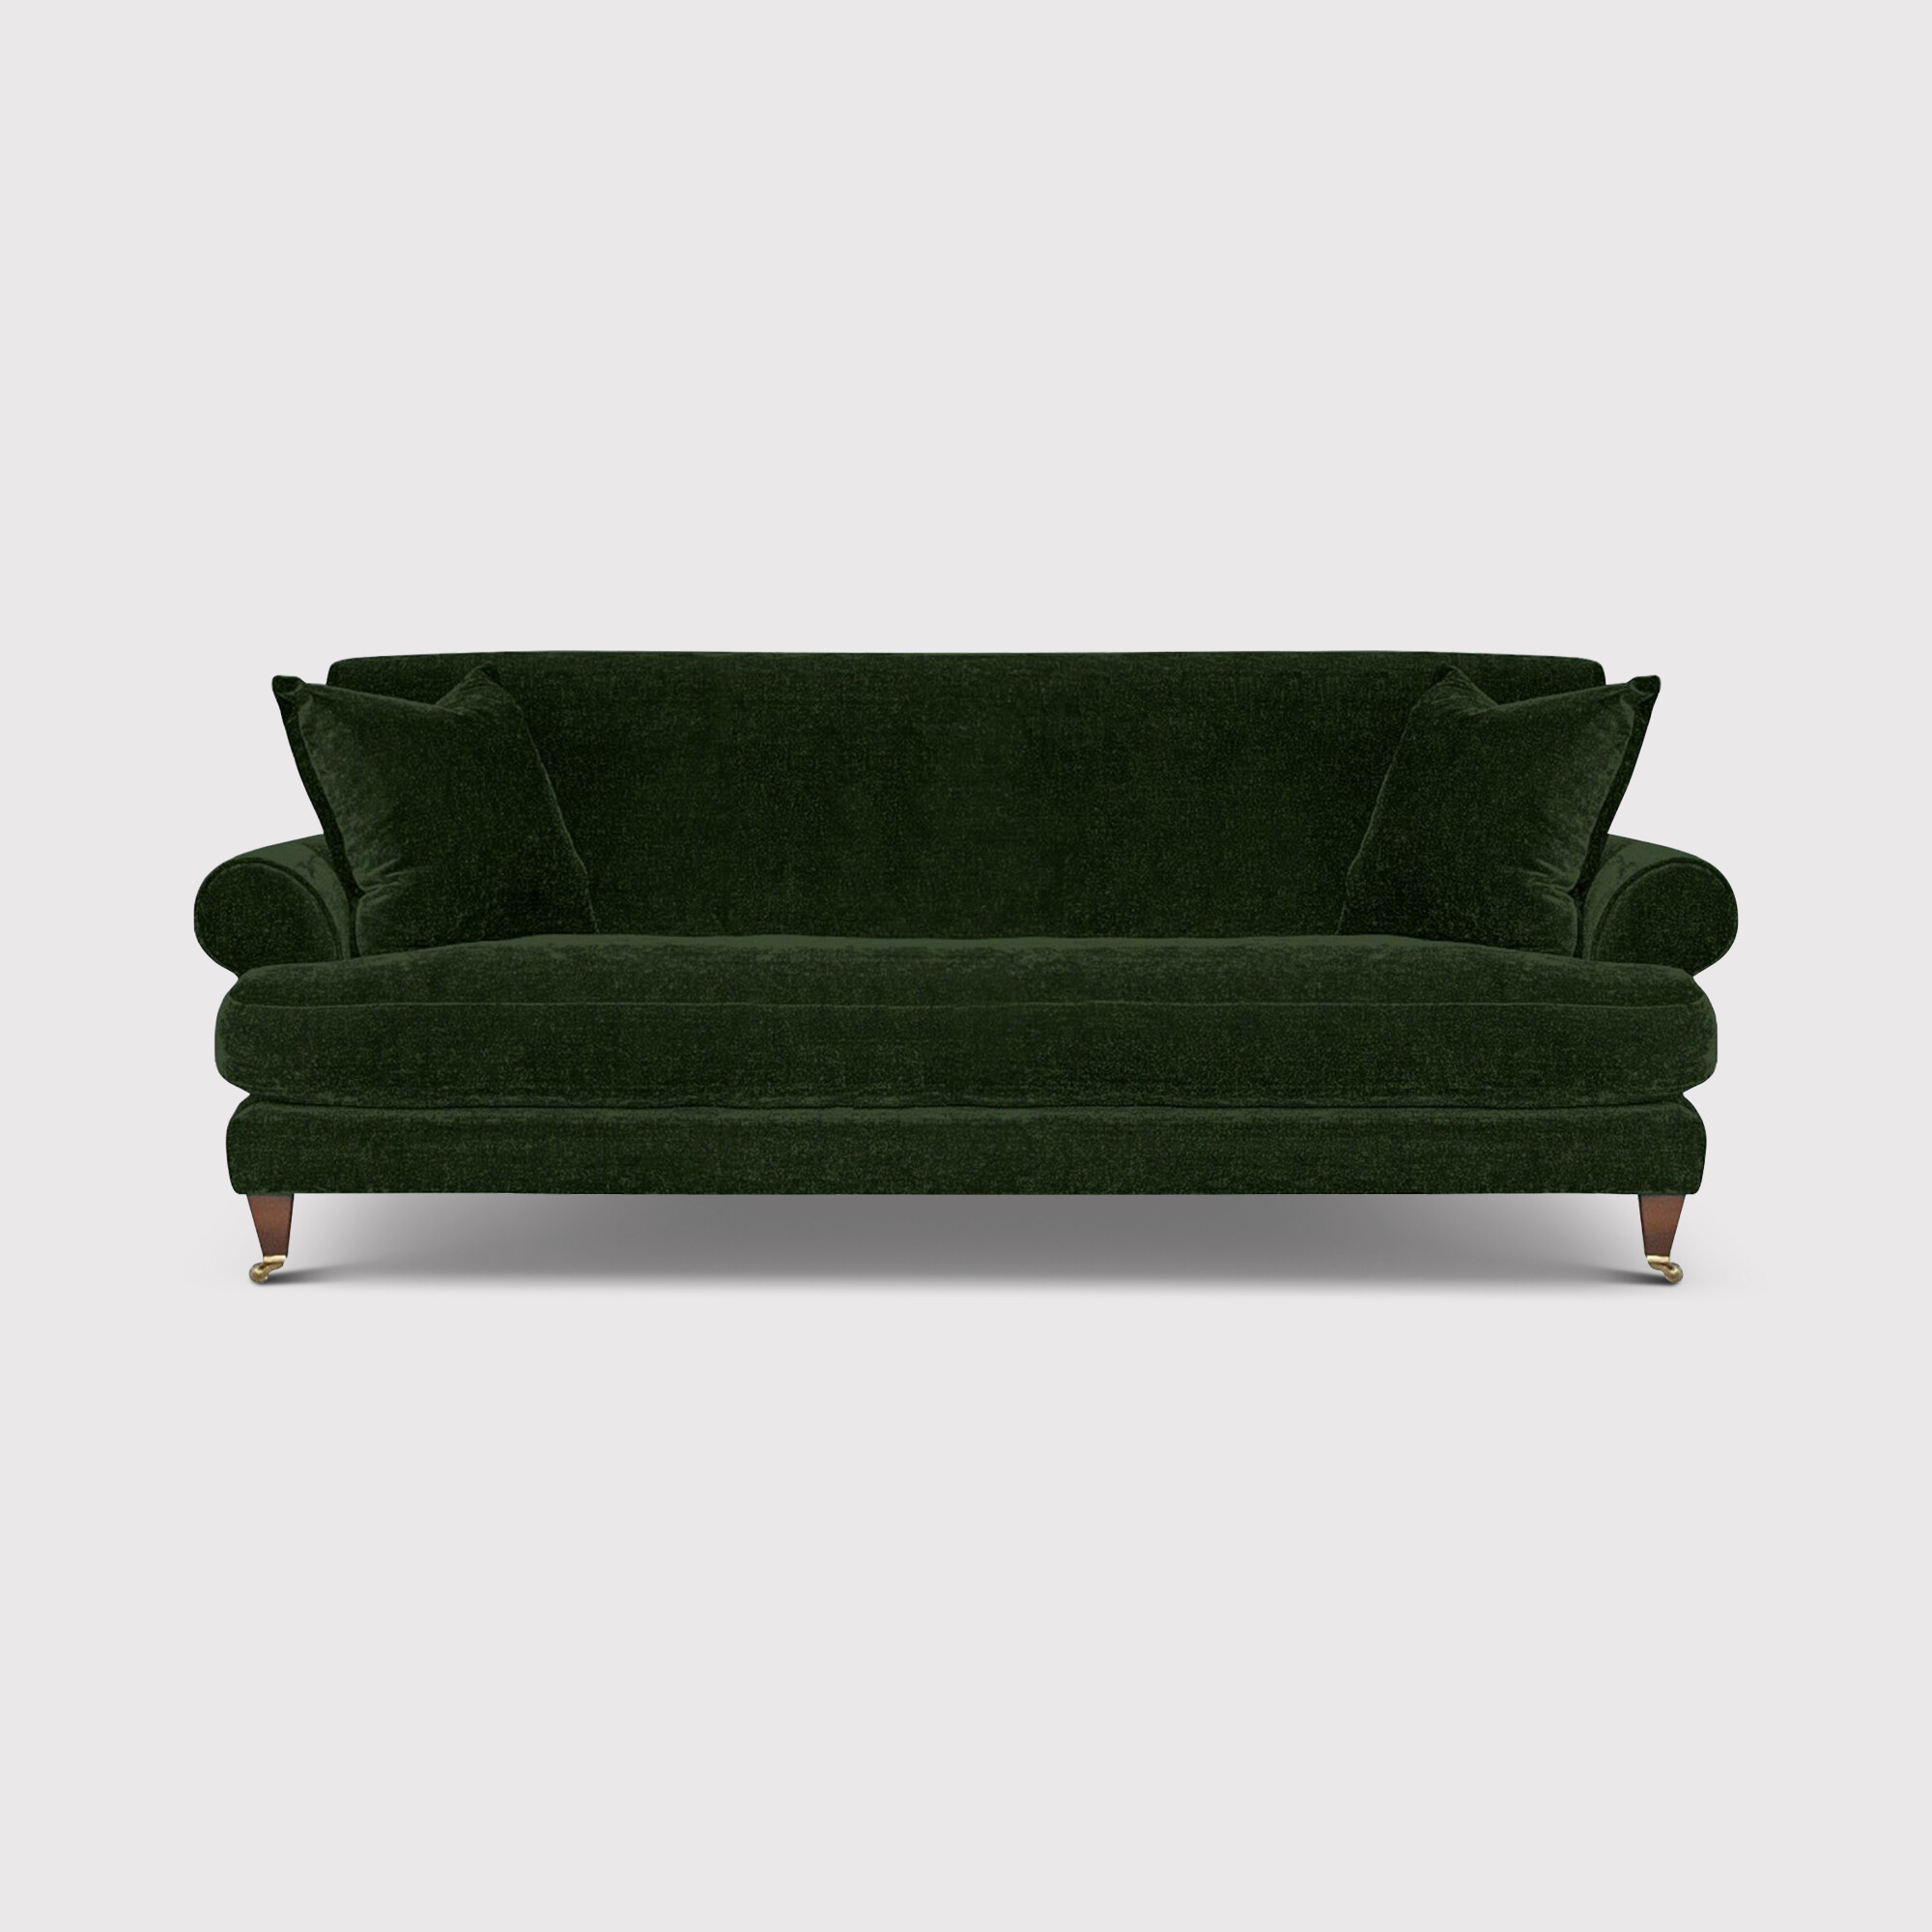 Fairlawn 3 Seater Sofa, Green Fabric | Barker & Stonehouse